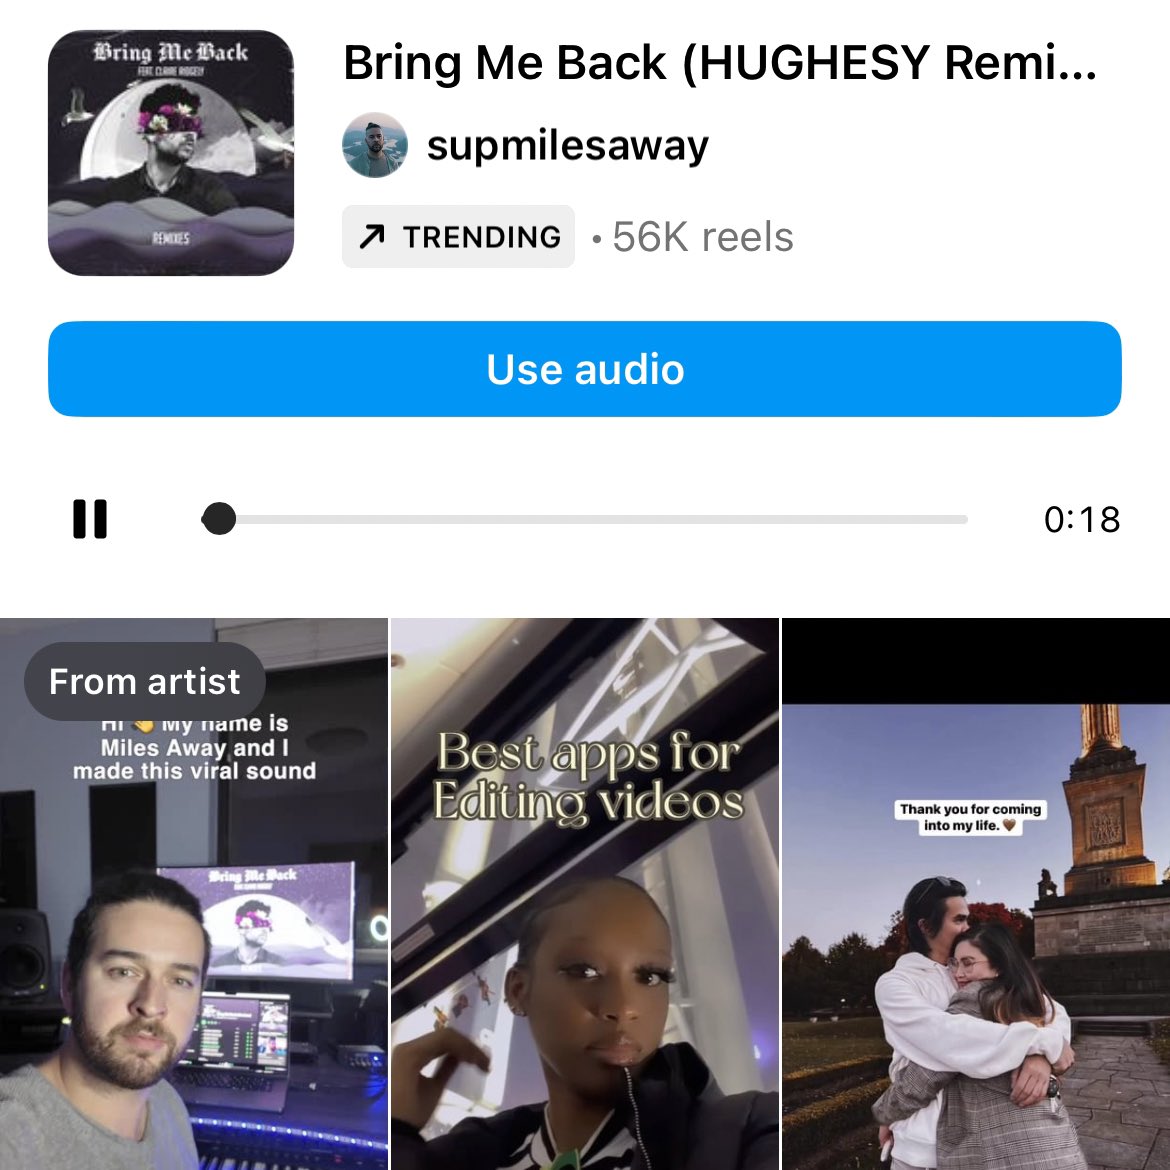 So crazy, Bring Me Back HUGHESY Remix just hit Trending on IG Reels now!